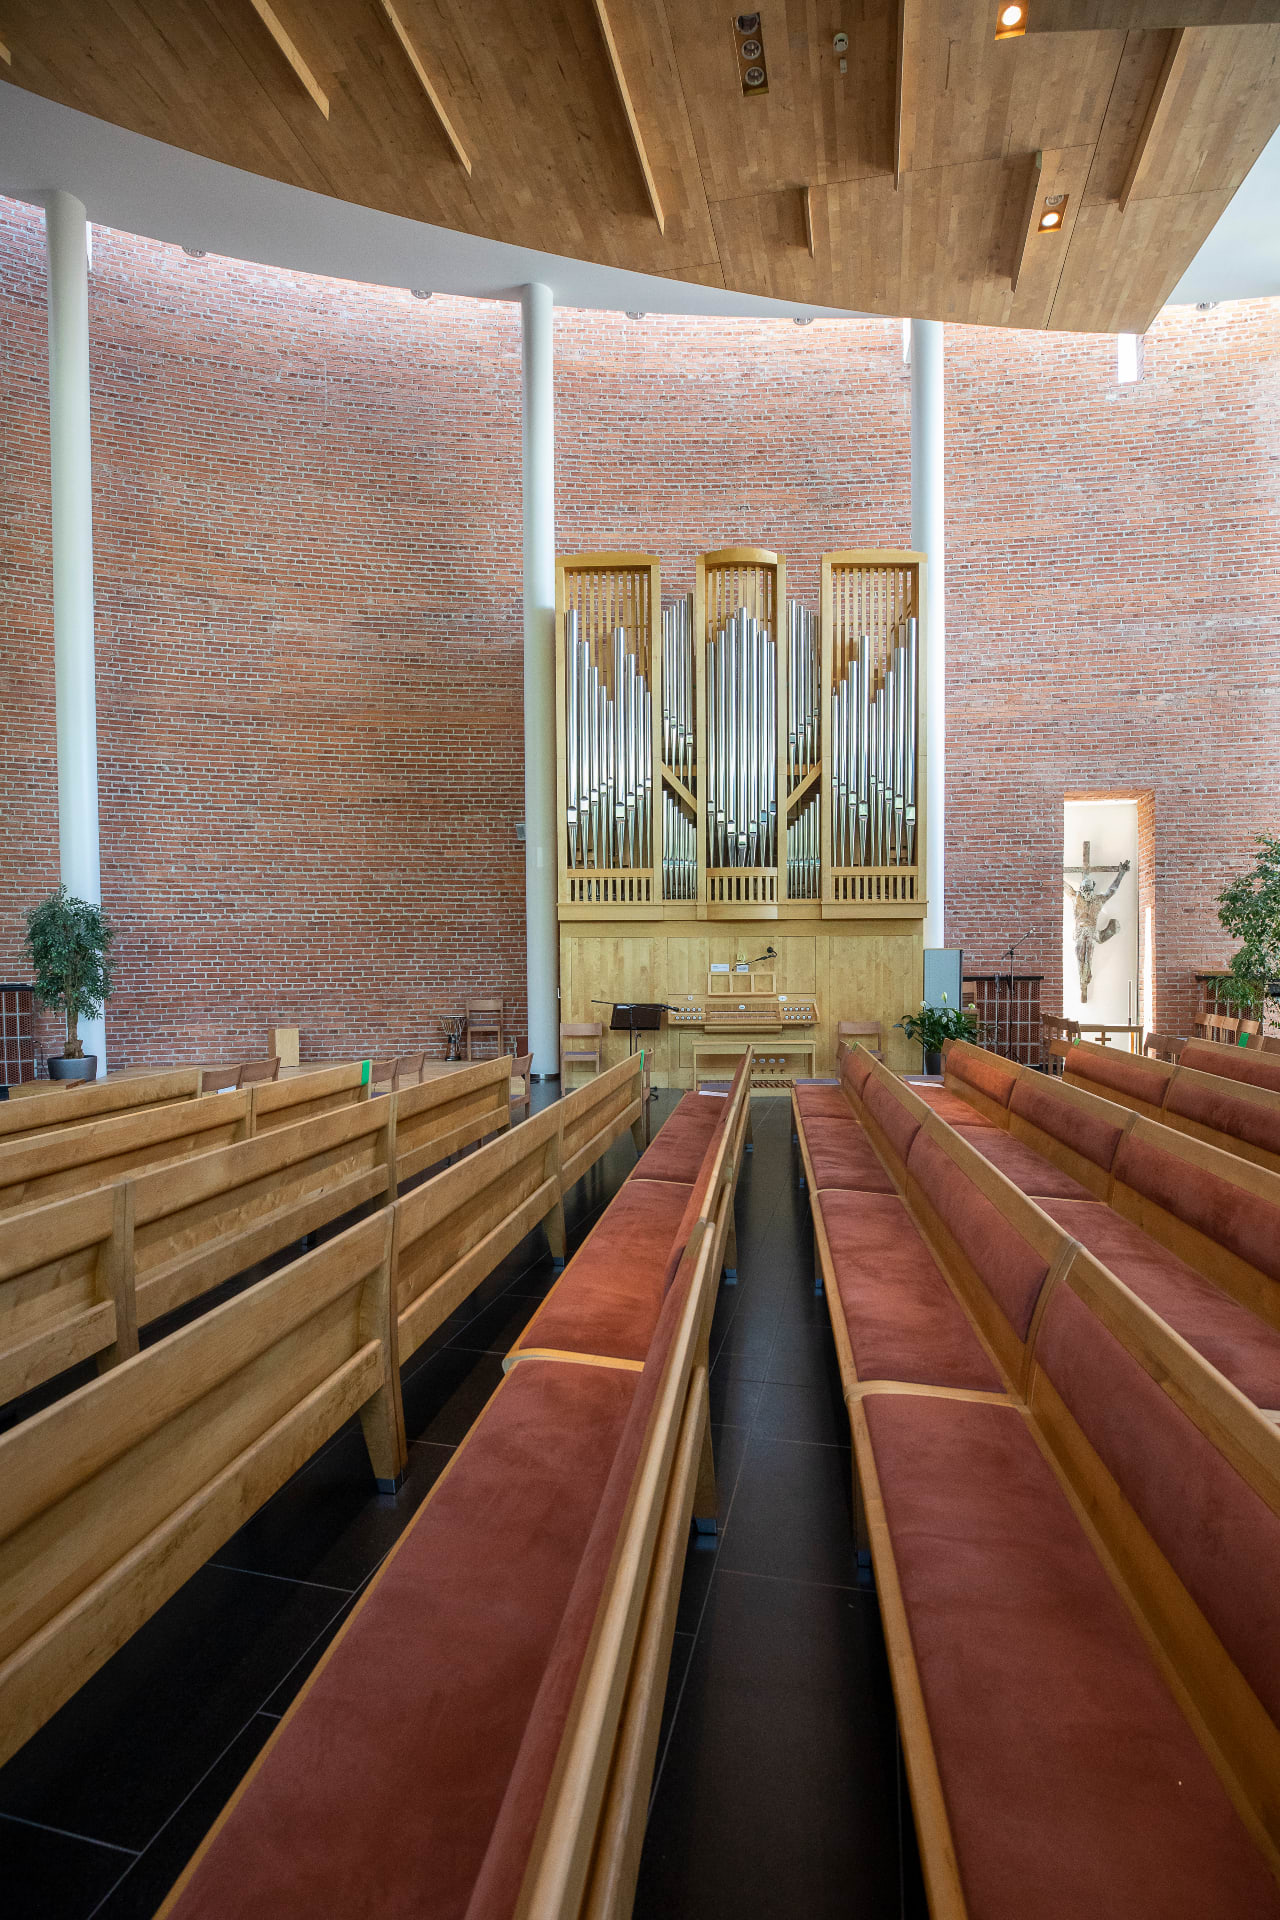 Aitolahti church organ and seats